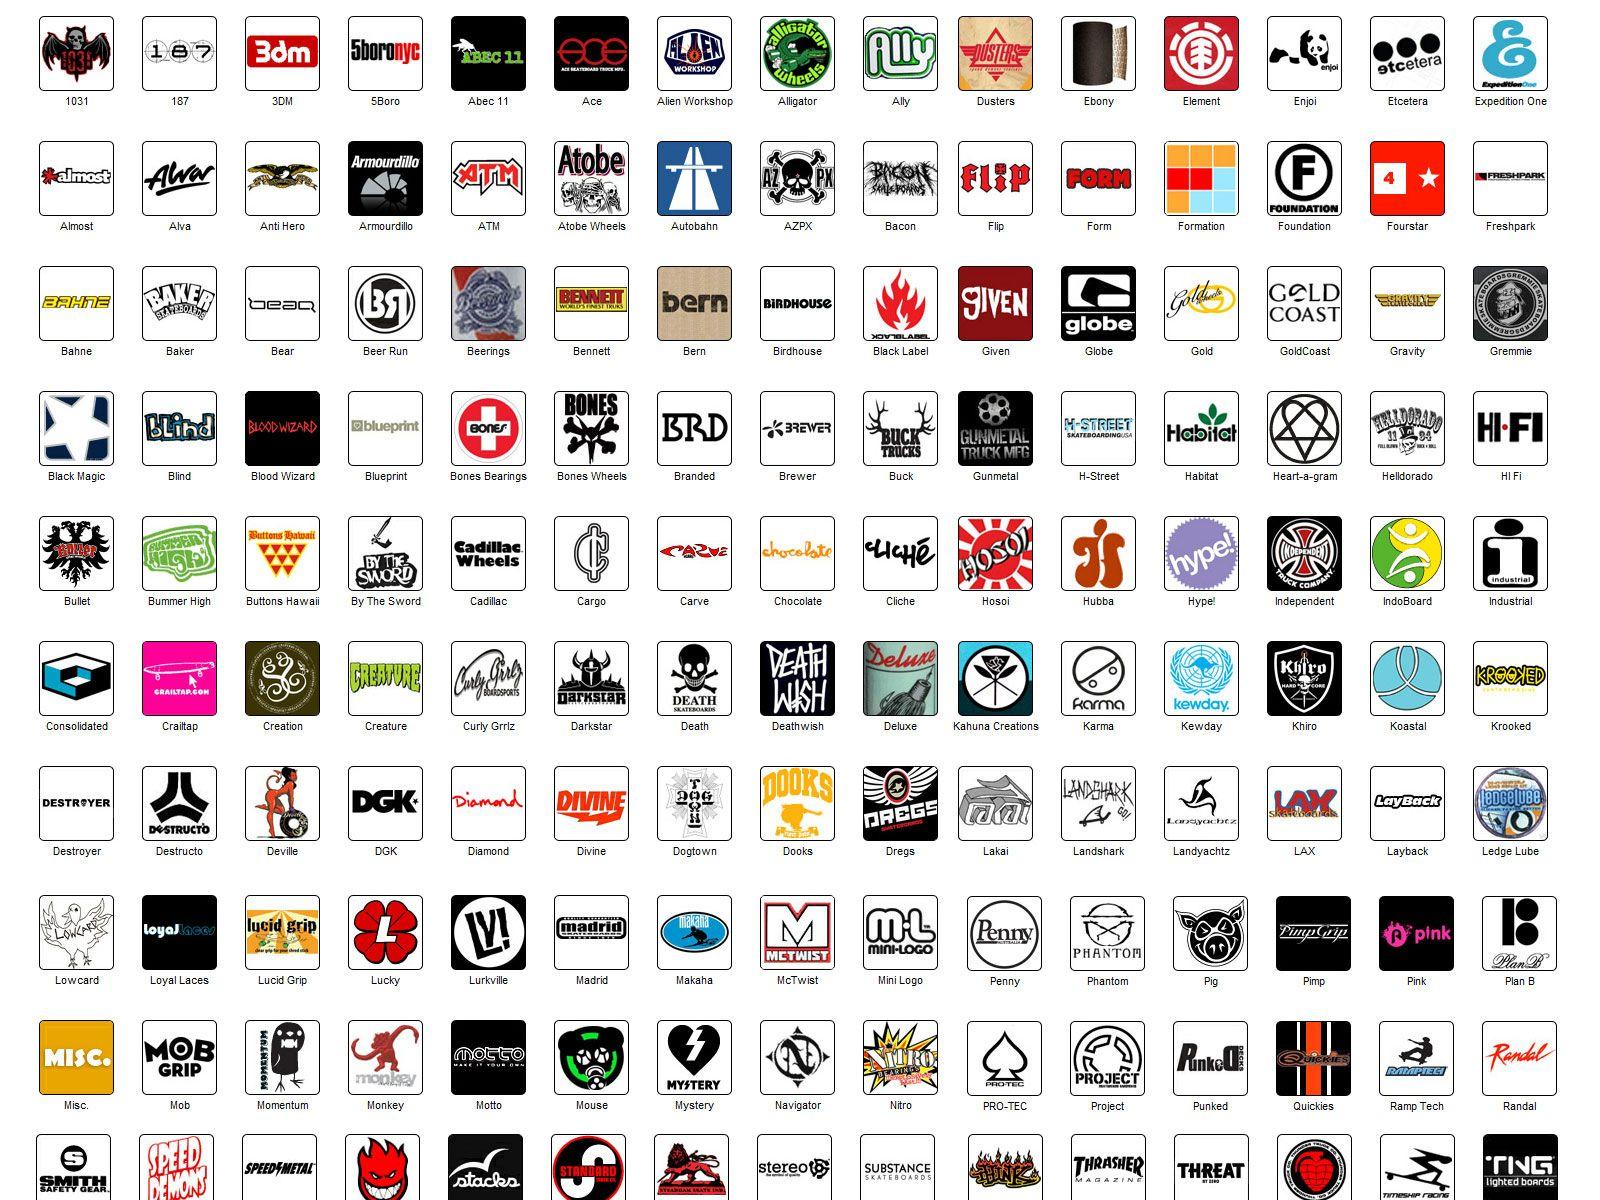 Clothing Brand with Alligator Logo - Skateboarding brands - list of skateboard brands